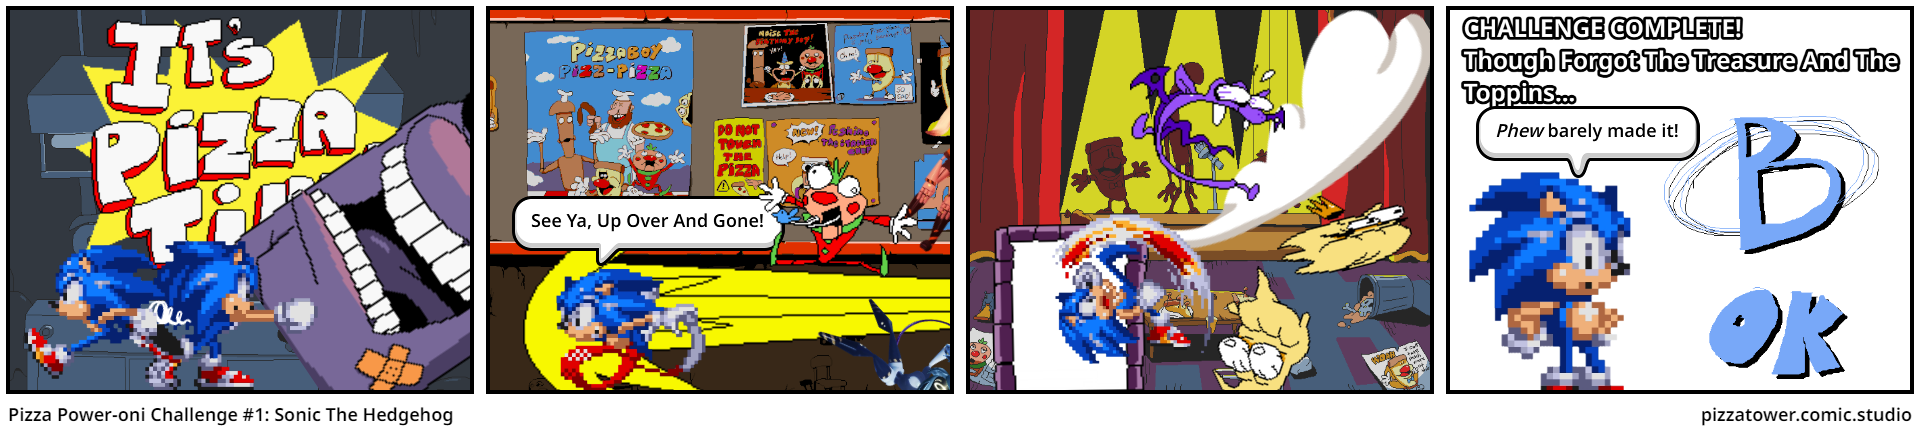 Pizza Power-oni Challenge #1: Sonic The Hedgehog